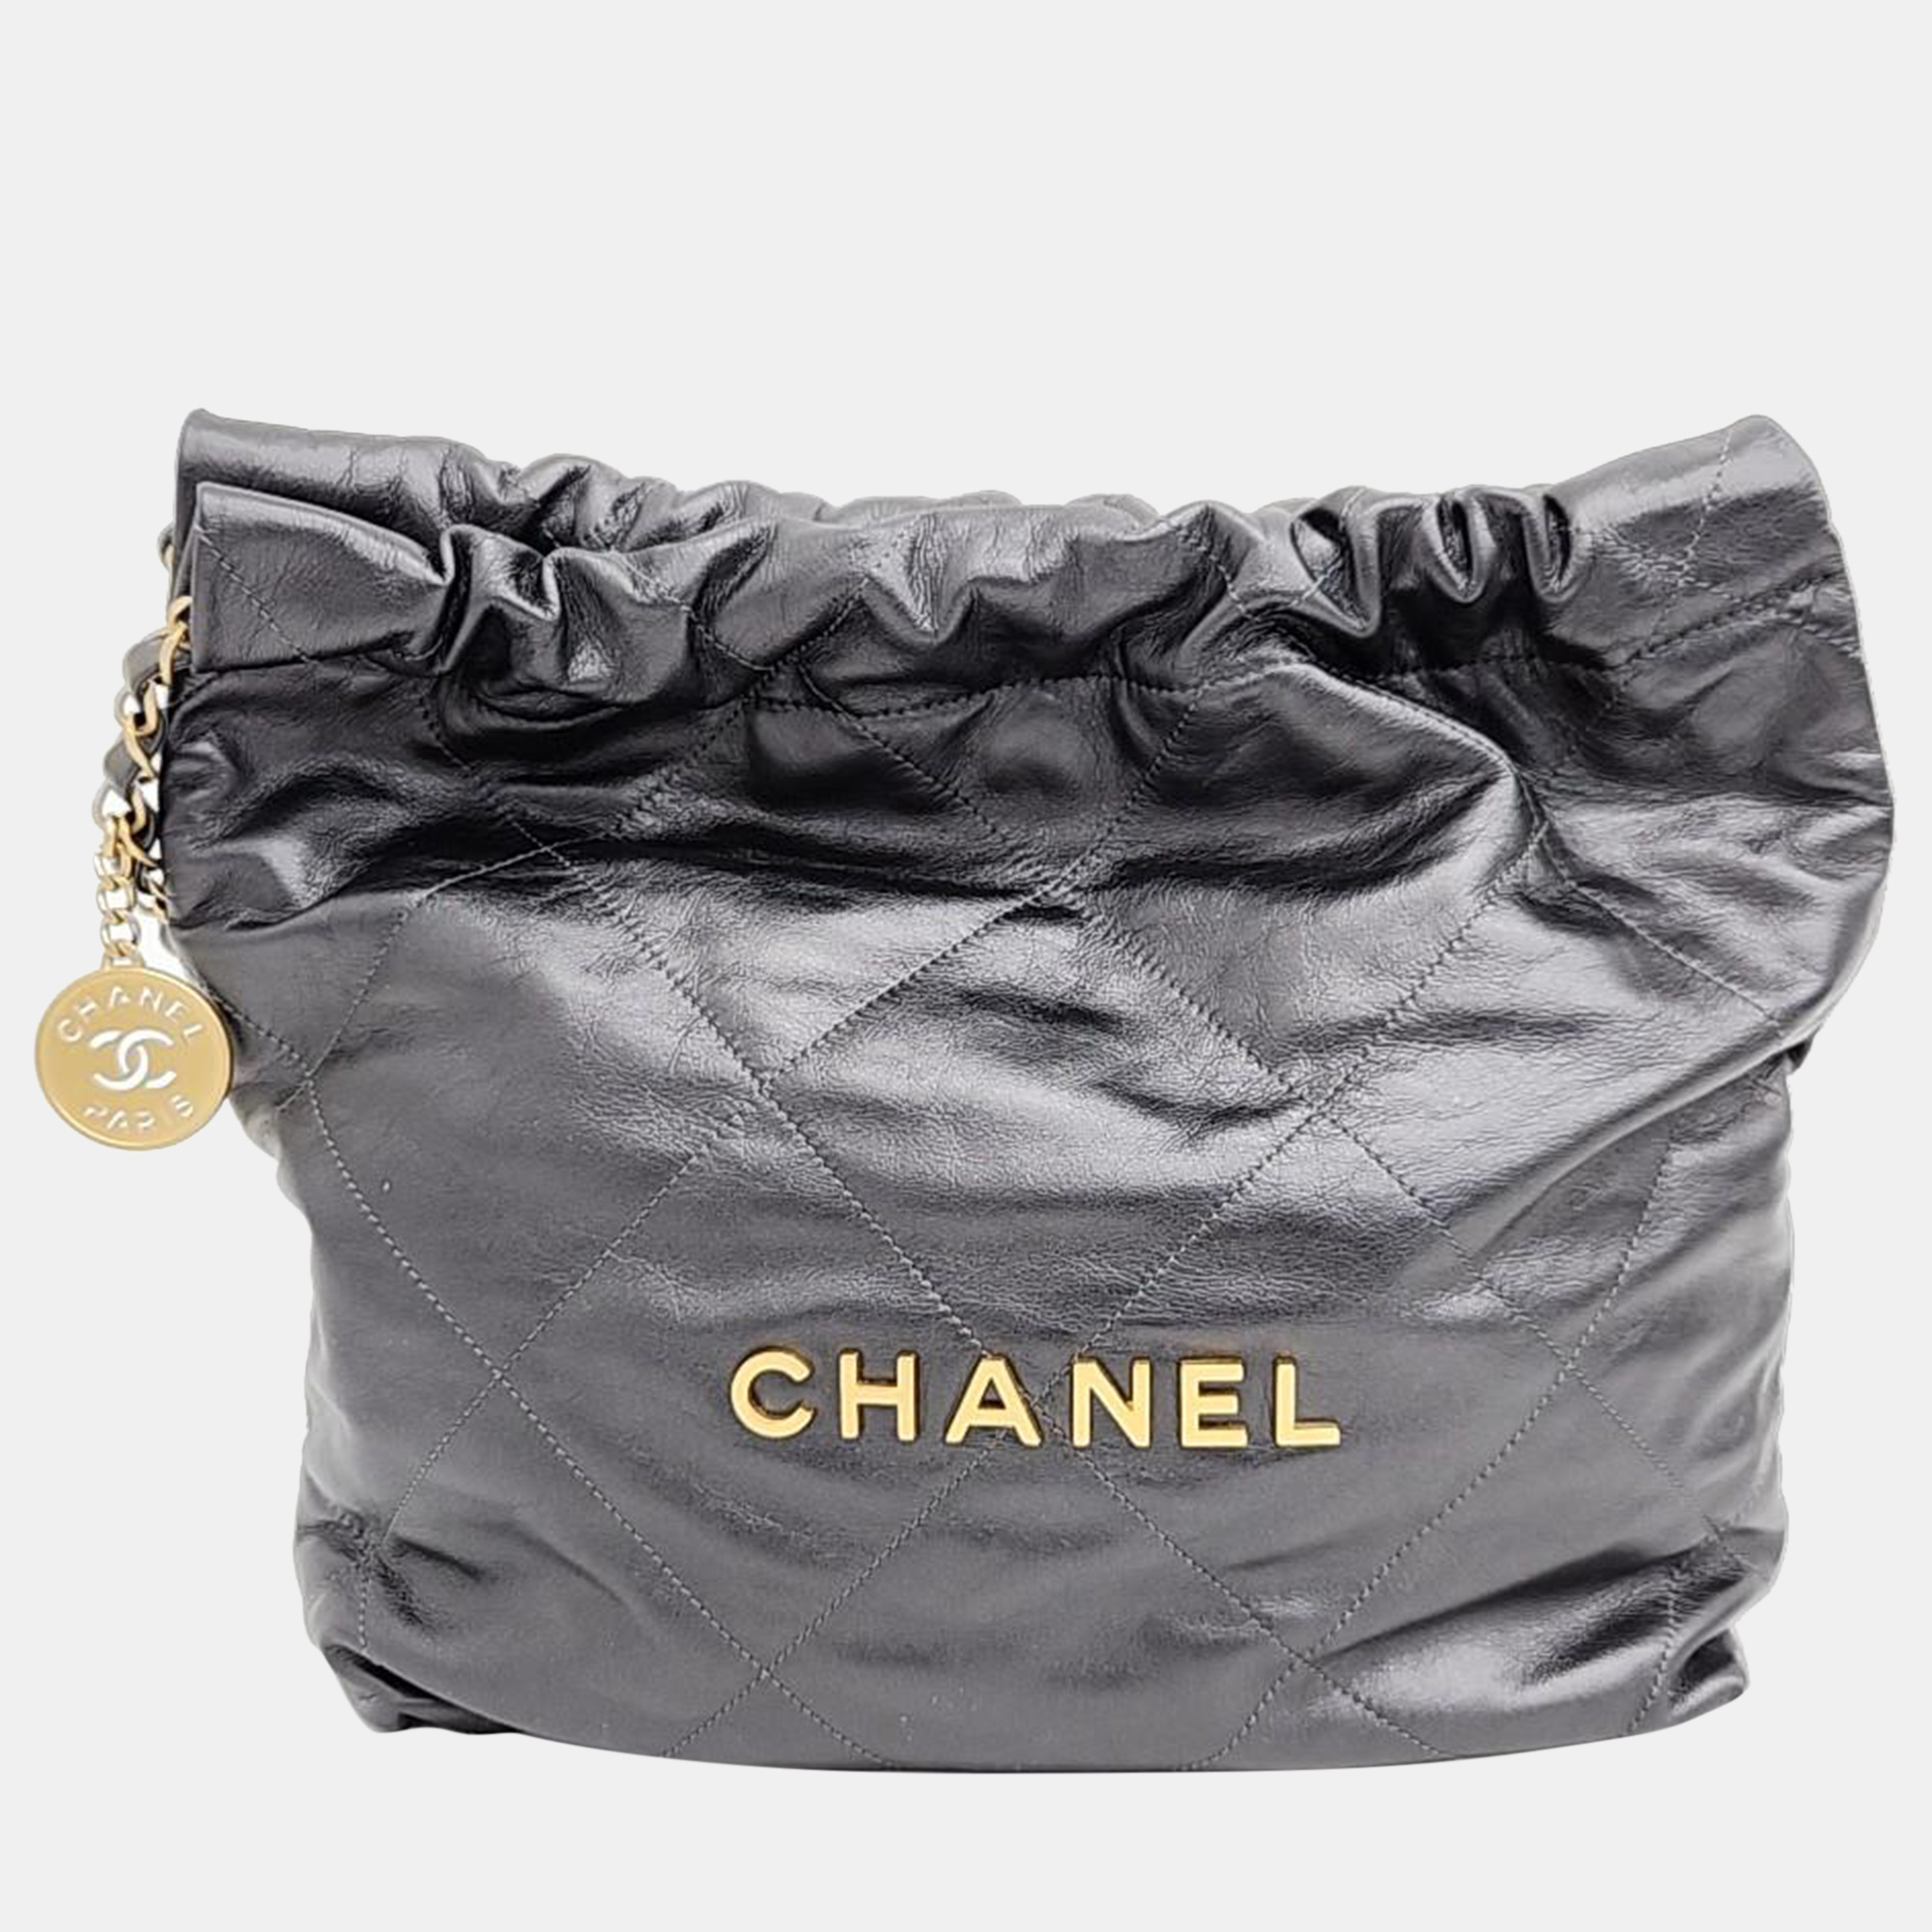 Chanel 22 small crossbody bag